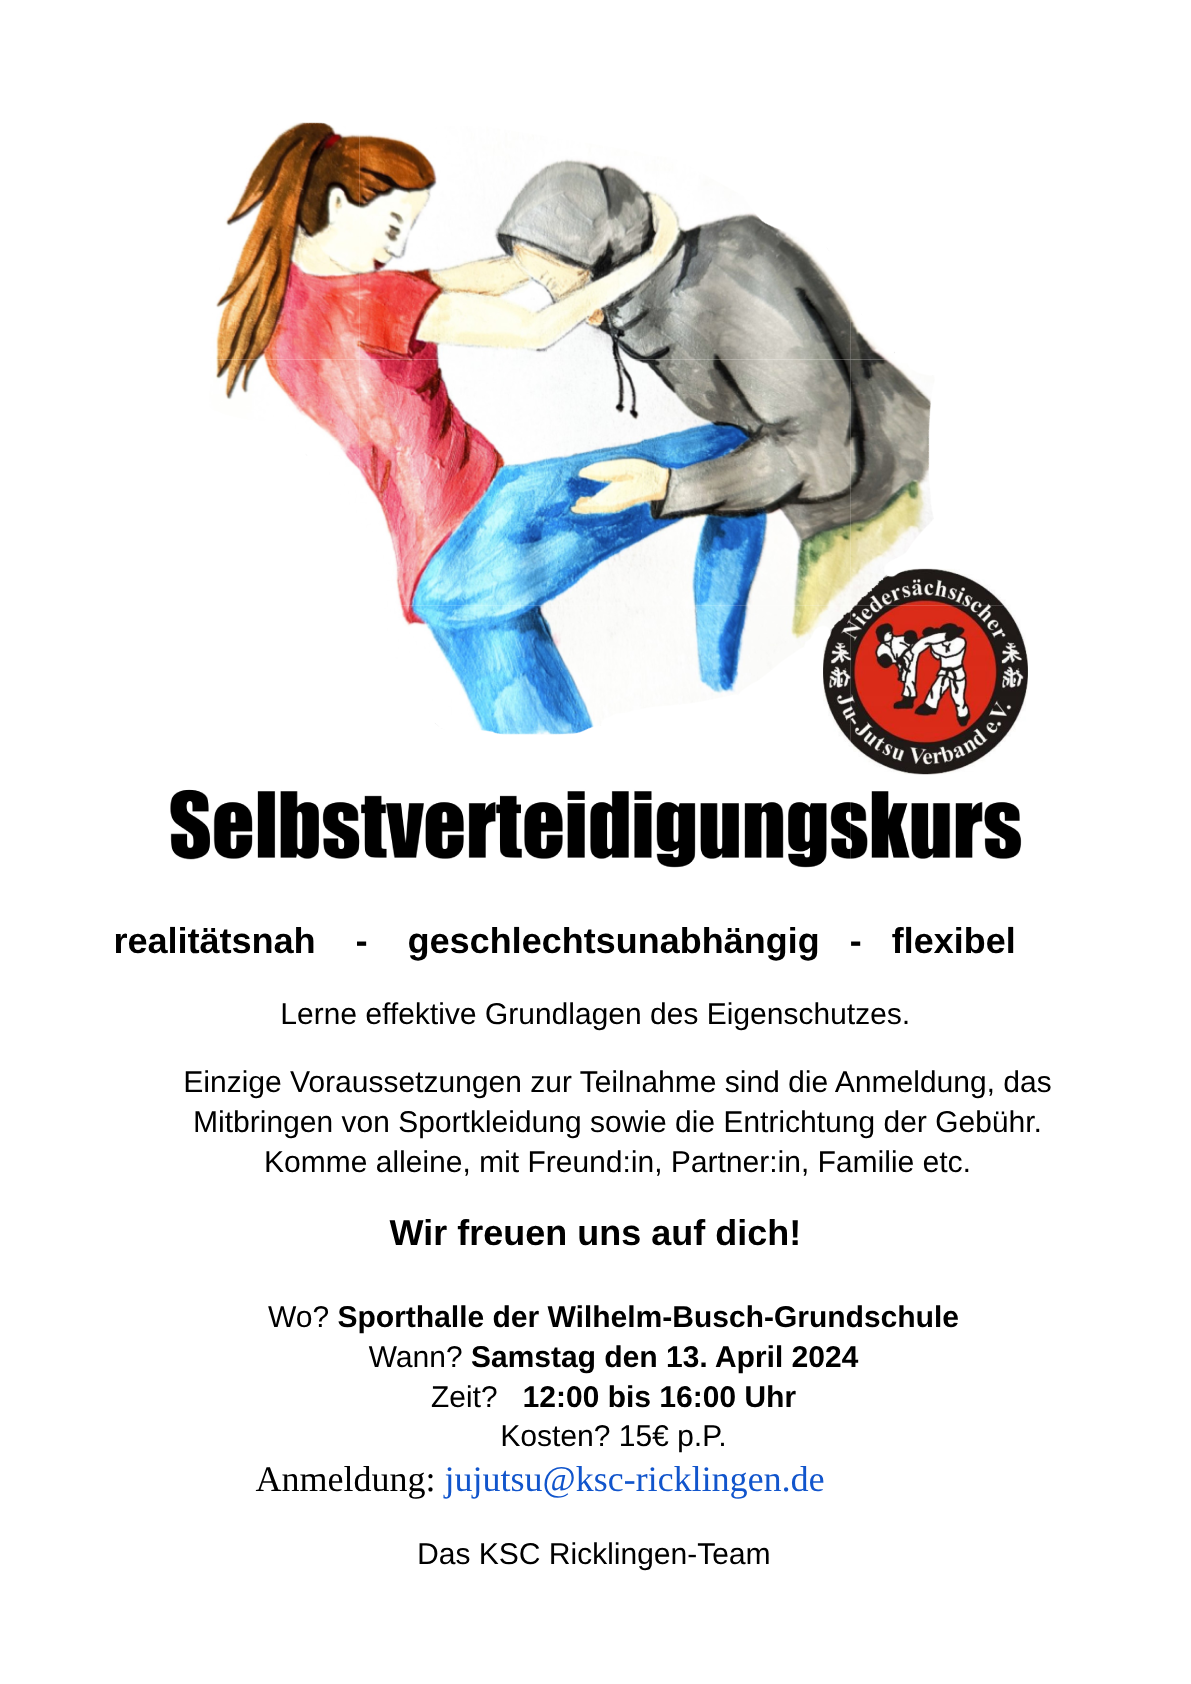 Featured image for “Selbstverteidigungskurs 13. April 2024”